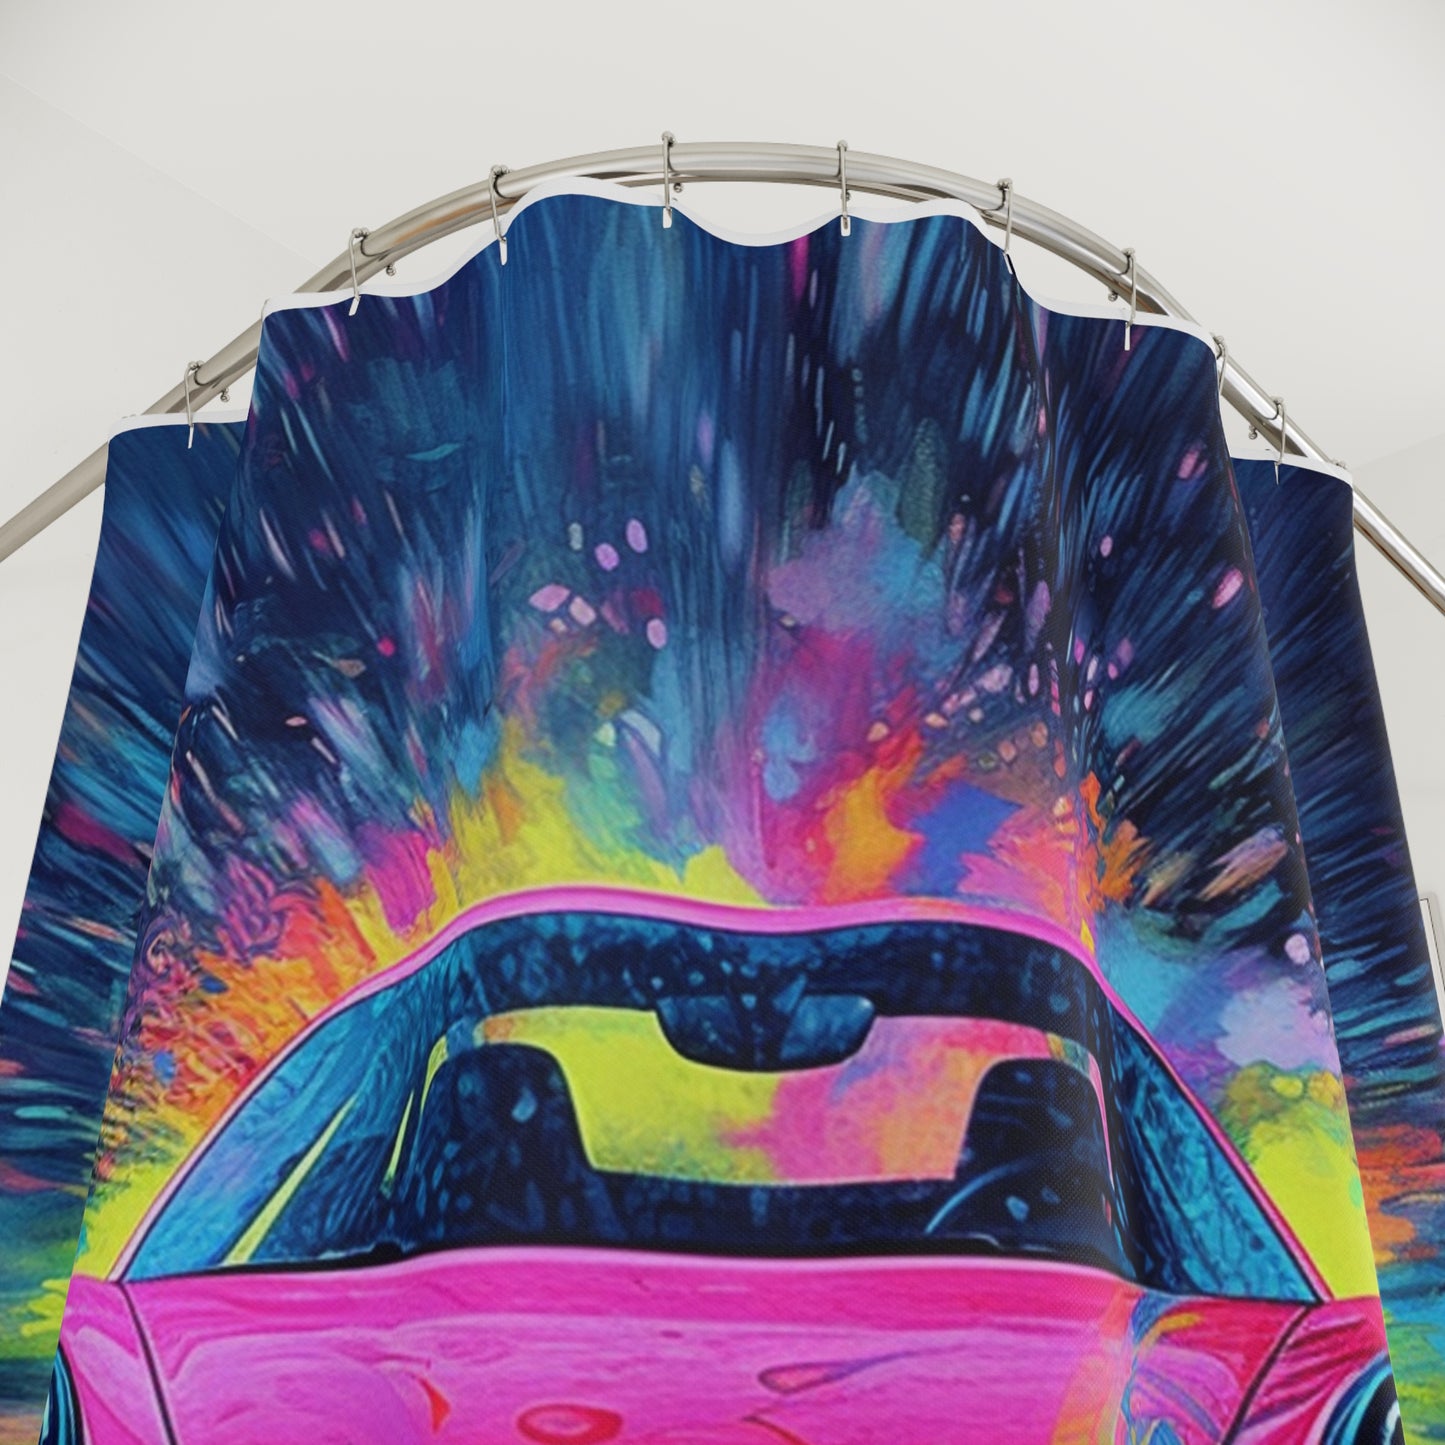 Polyester Shower Curtain Pink Porsche water fusion 3